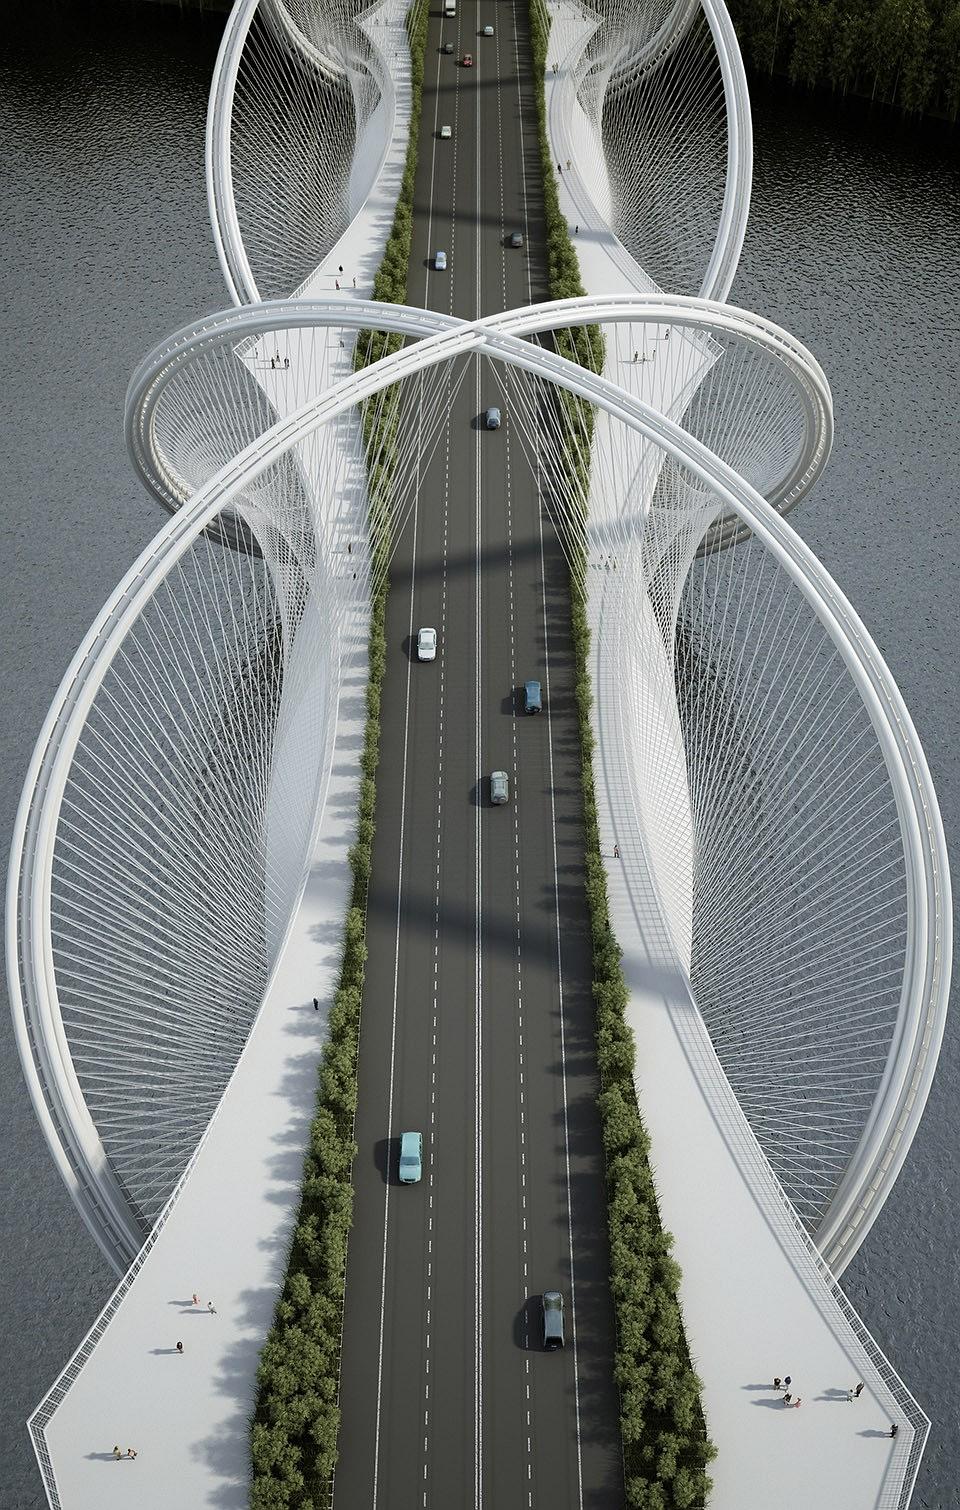 p47680381 北京冬奥会景观桥设计——五环廊桥赏析（腾云驾雾的不真实感，美！！！）